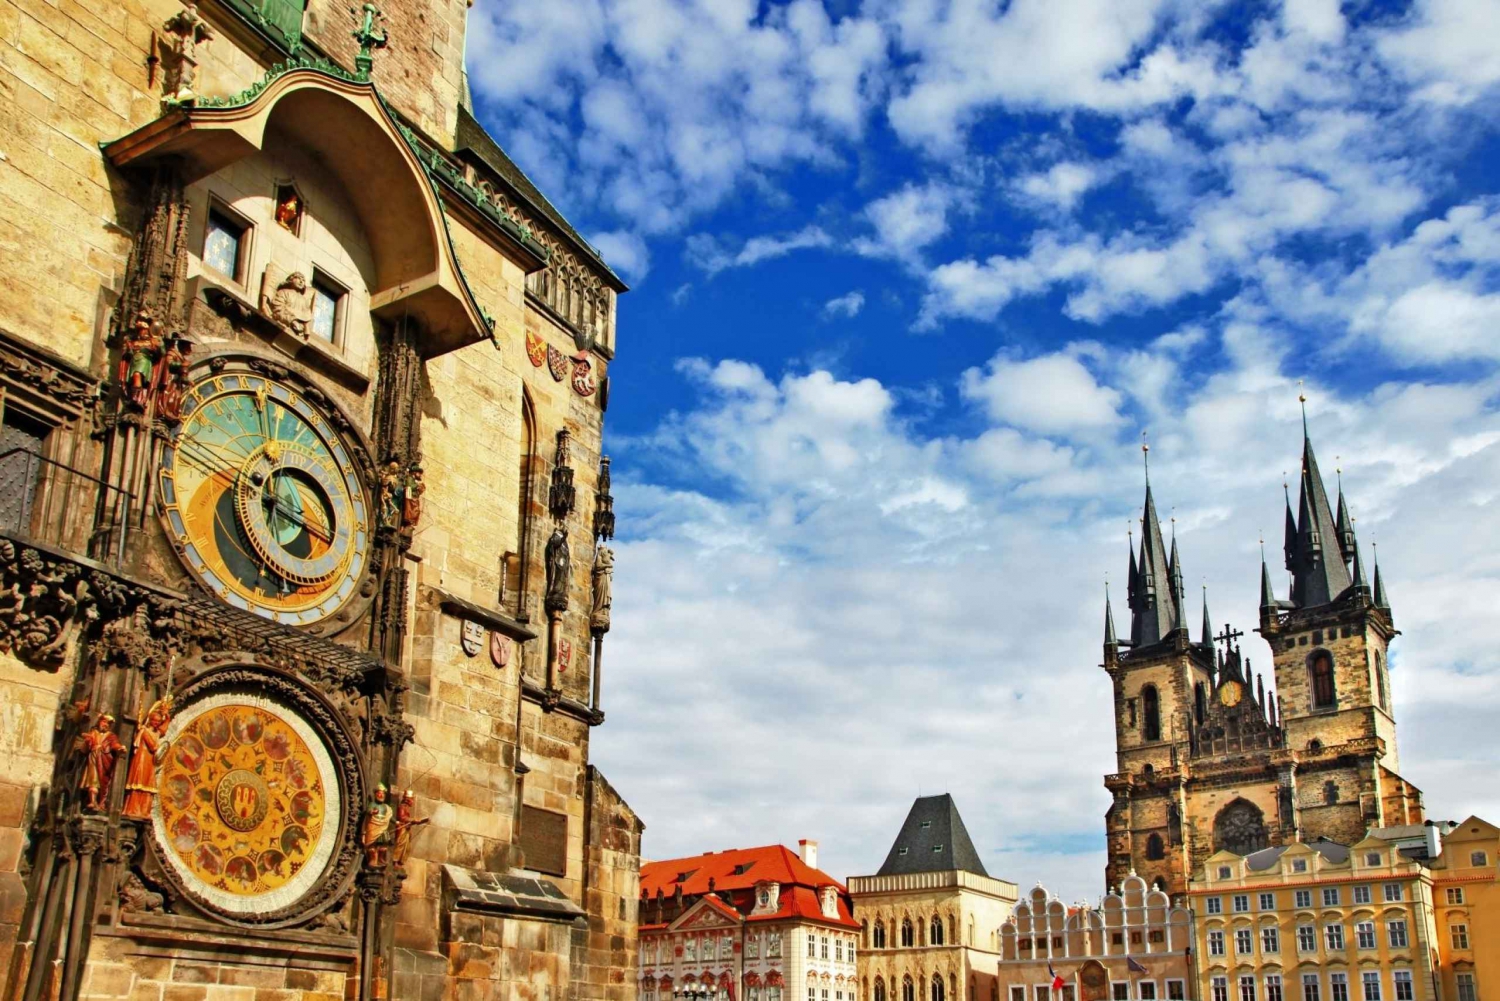 Prague Old Town Tour, Astronomical Clock, Charles Bridge